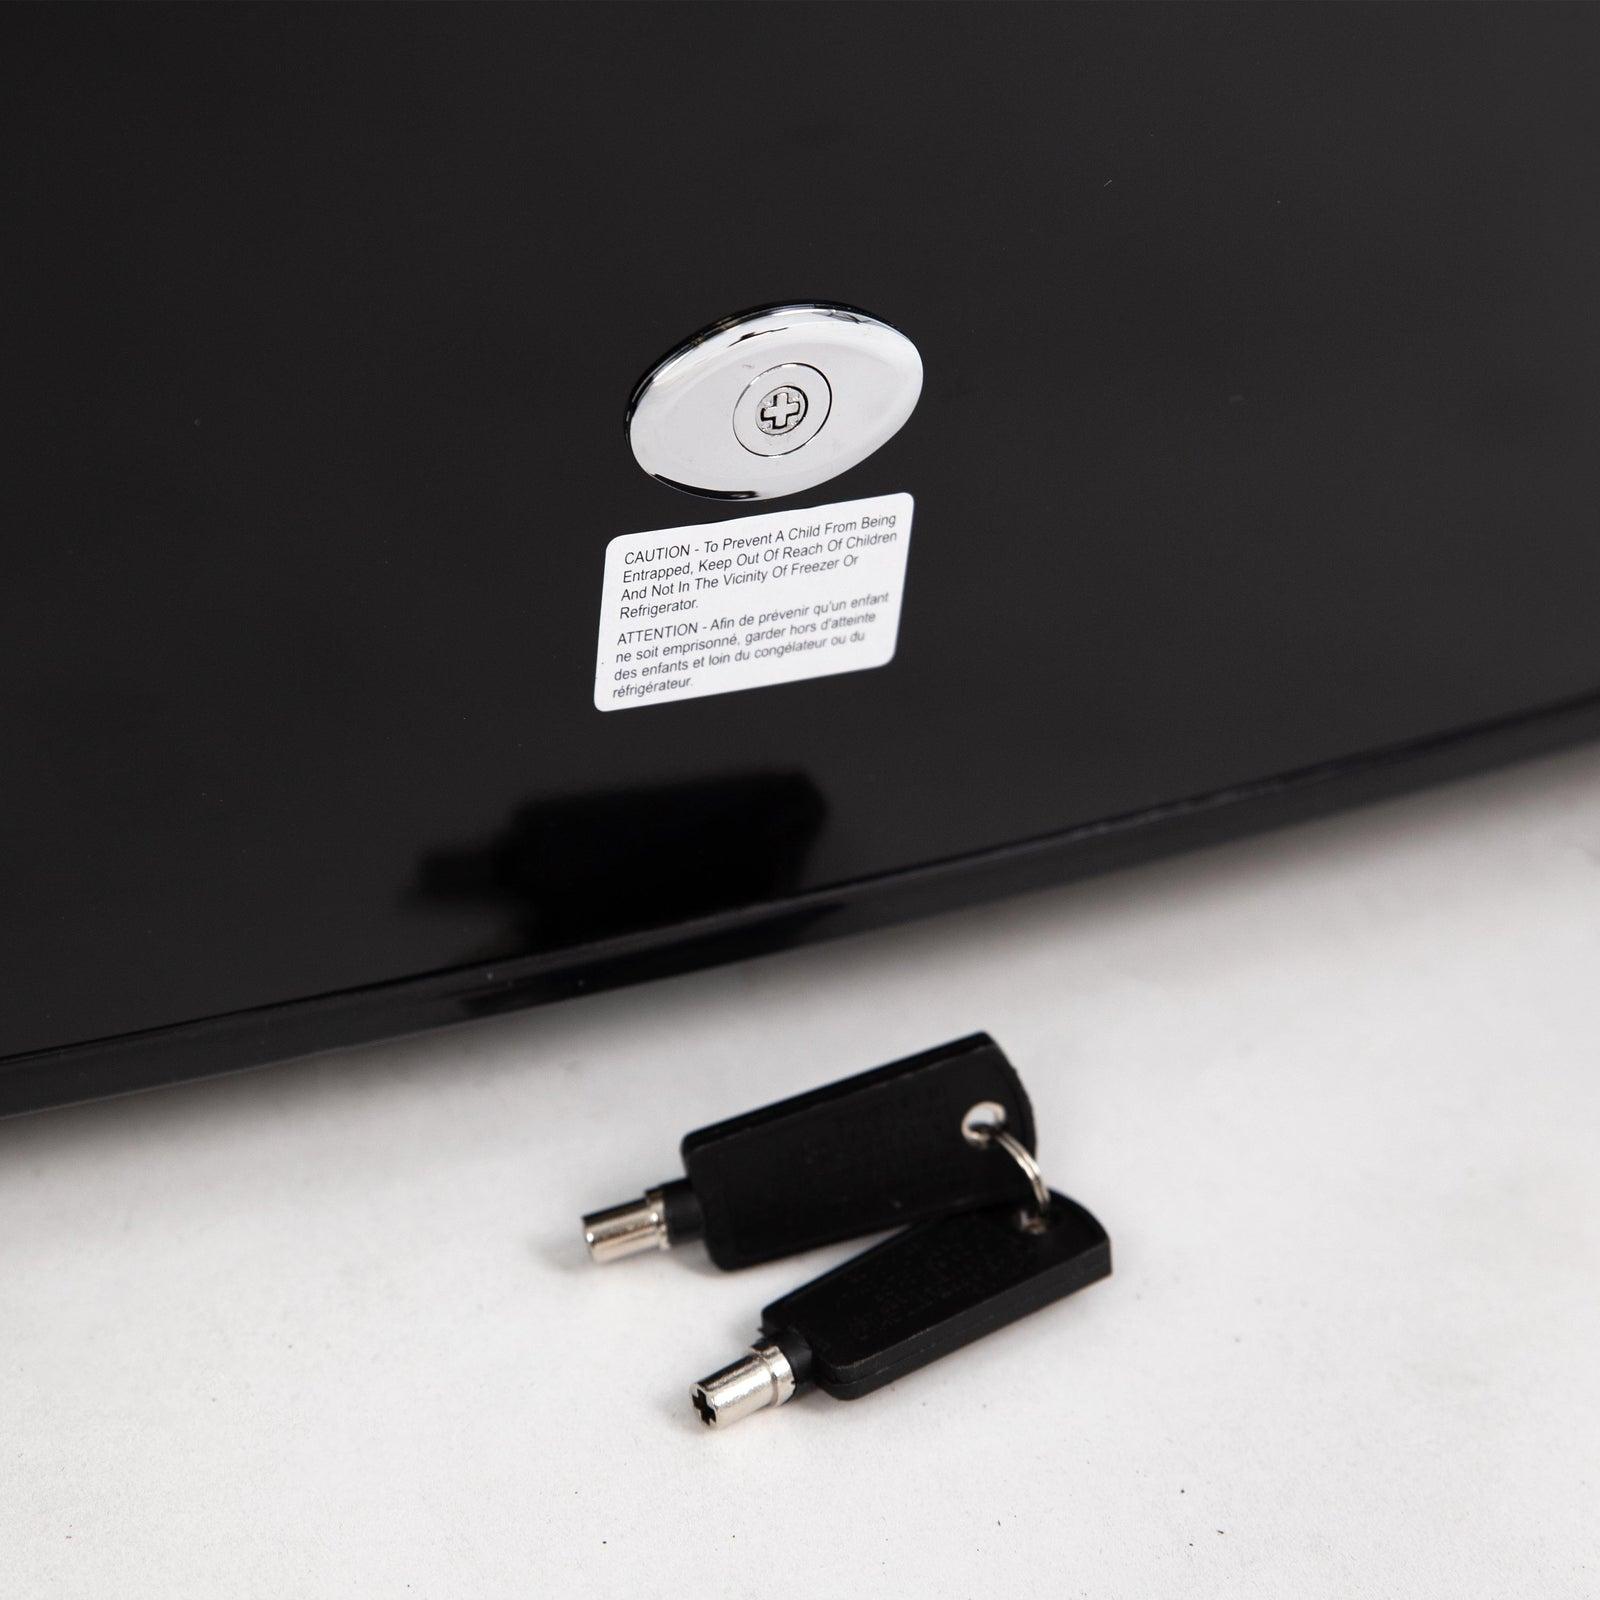 Avanti 4.4 cu. ft. Compact Refrigerator - Black / 4.4 cu. ft.